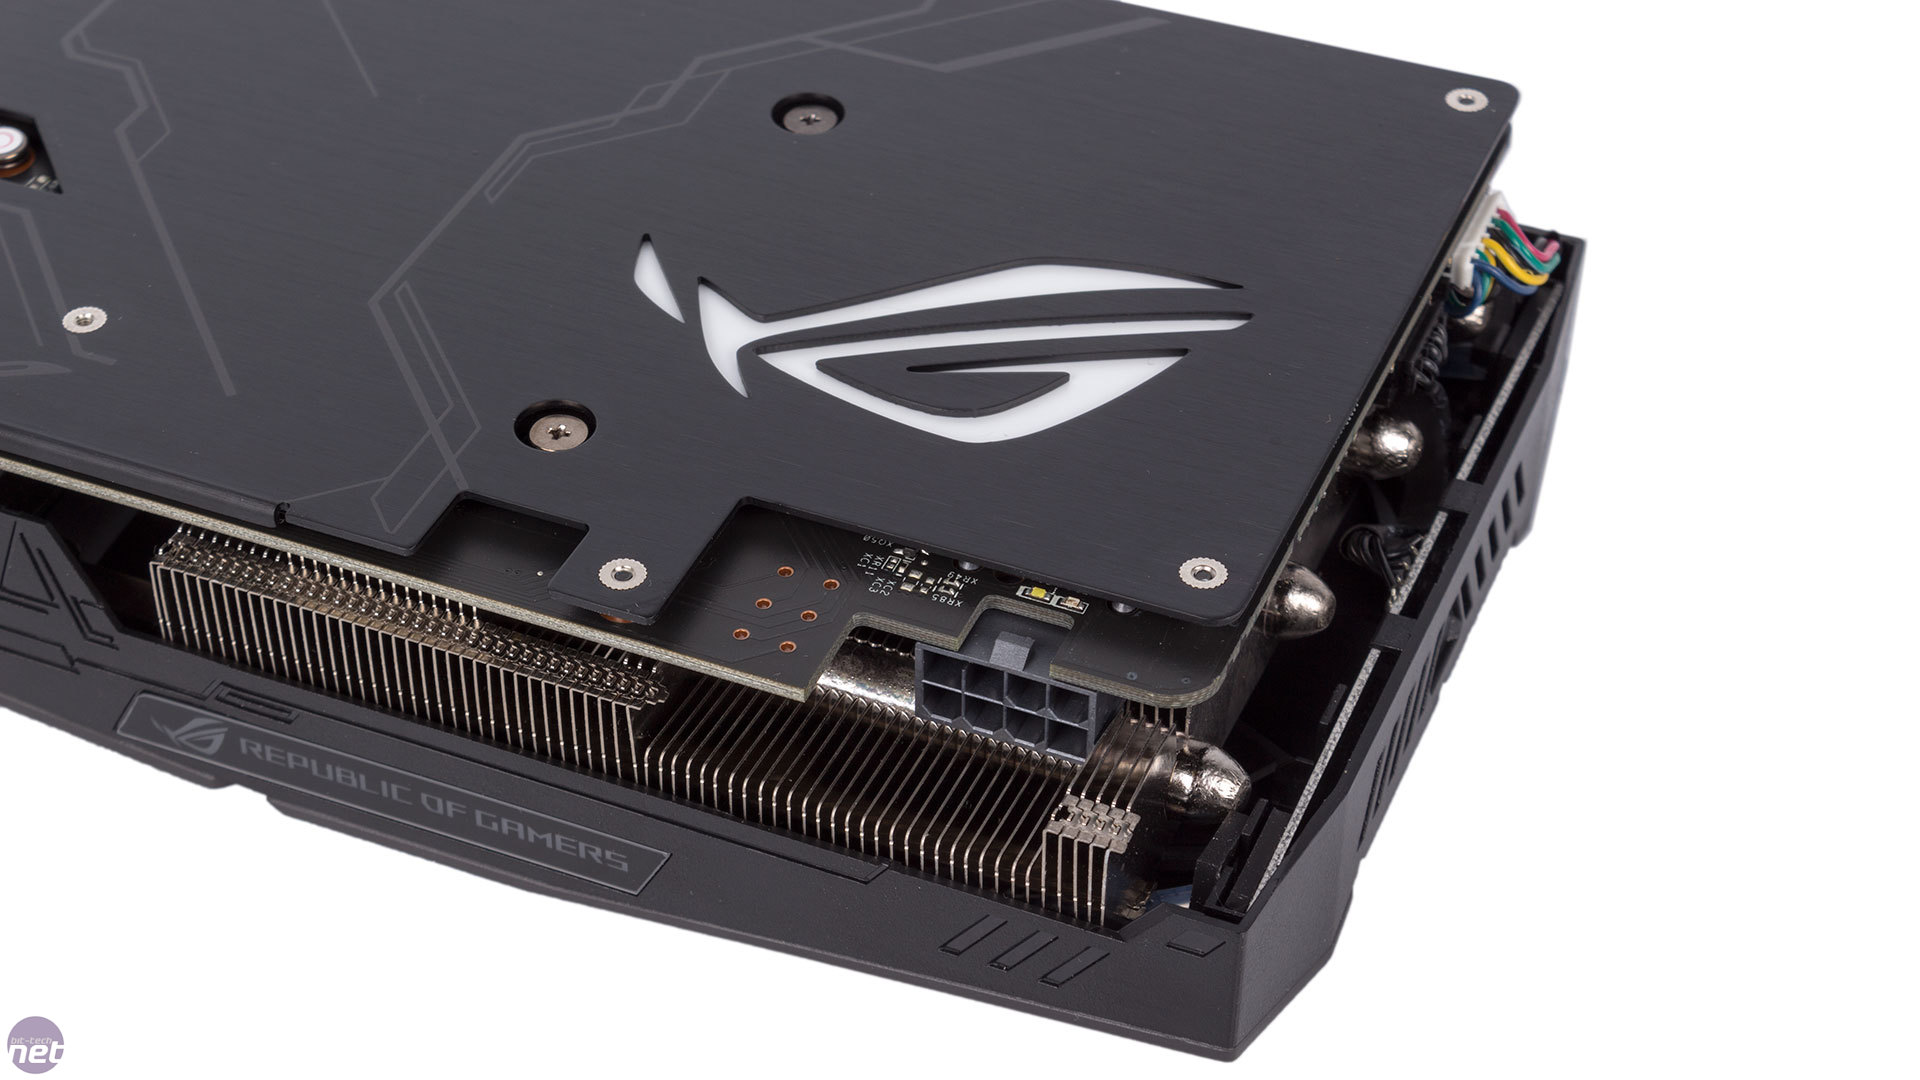 ASUS Radeon RX480 8GB Stryx